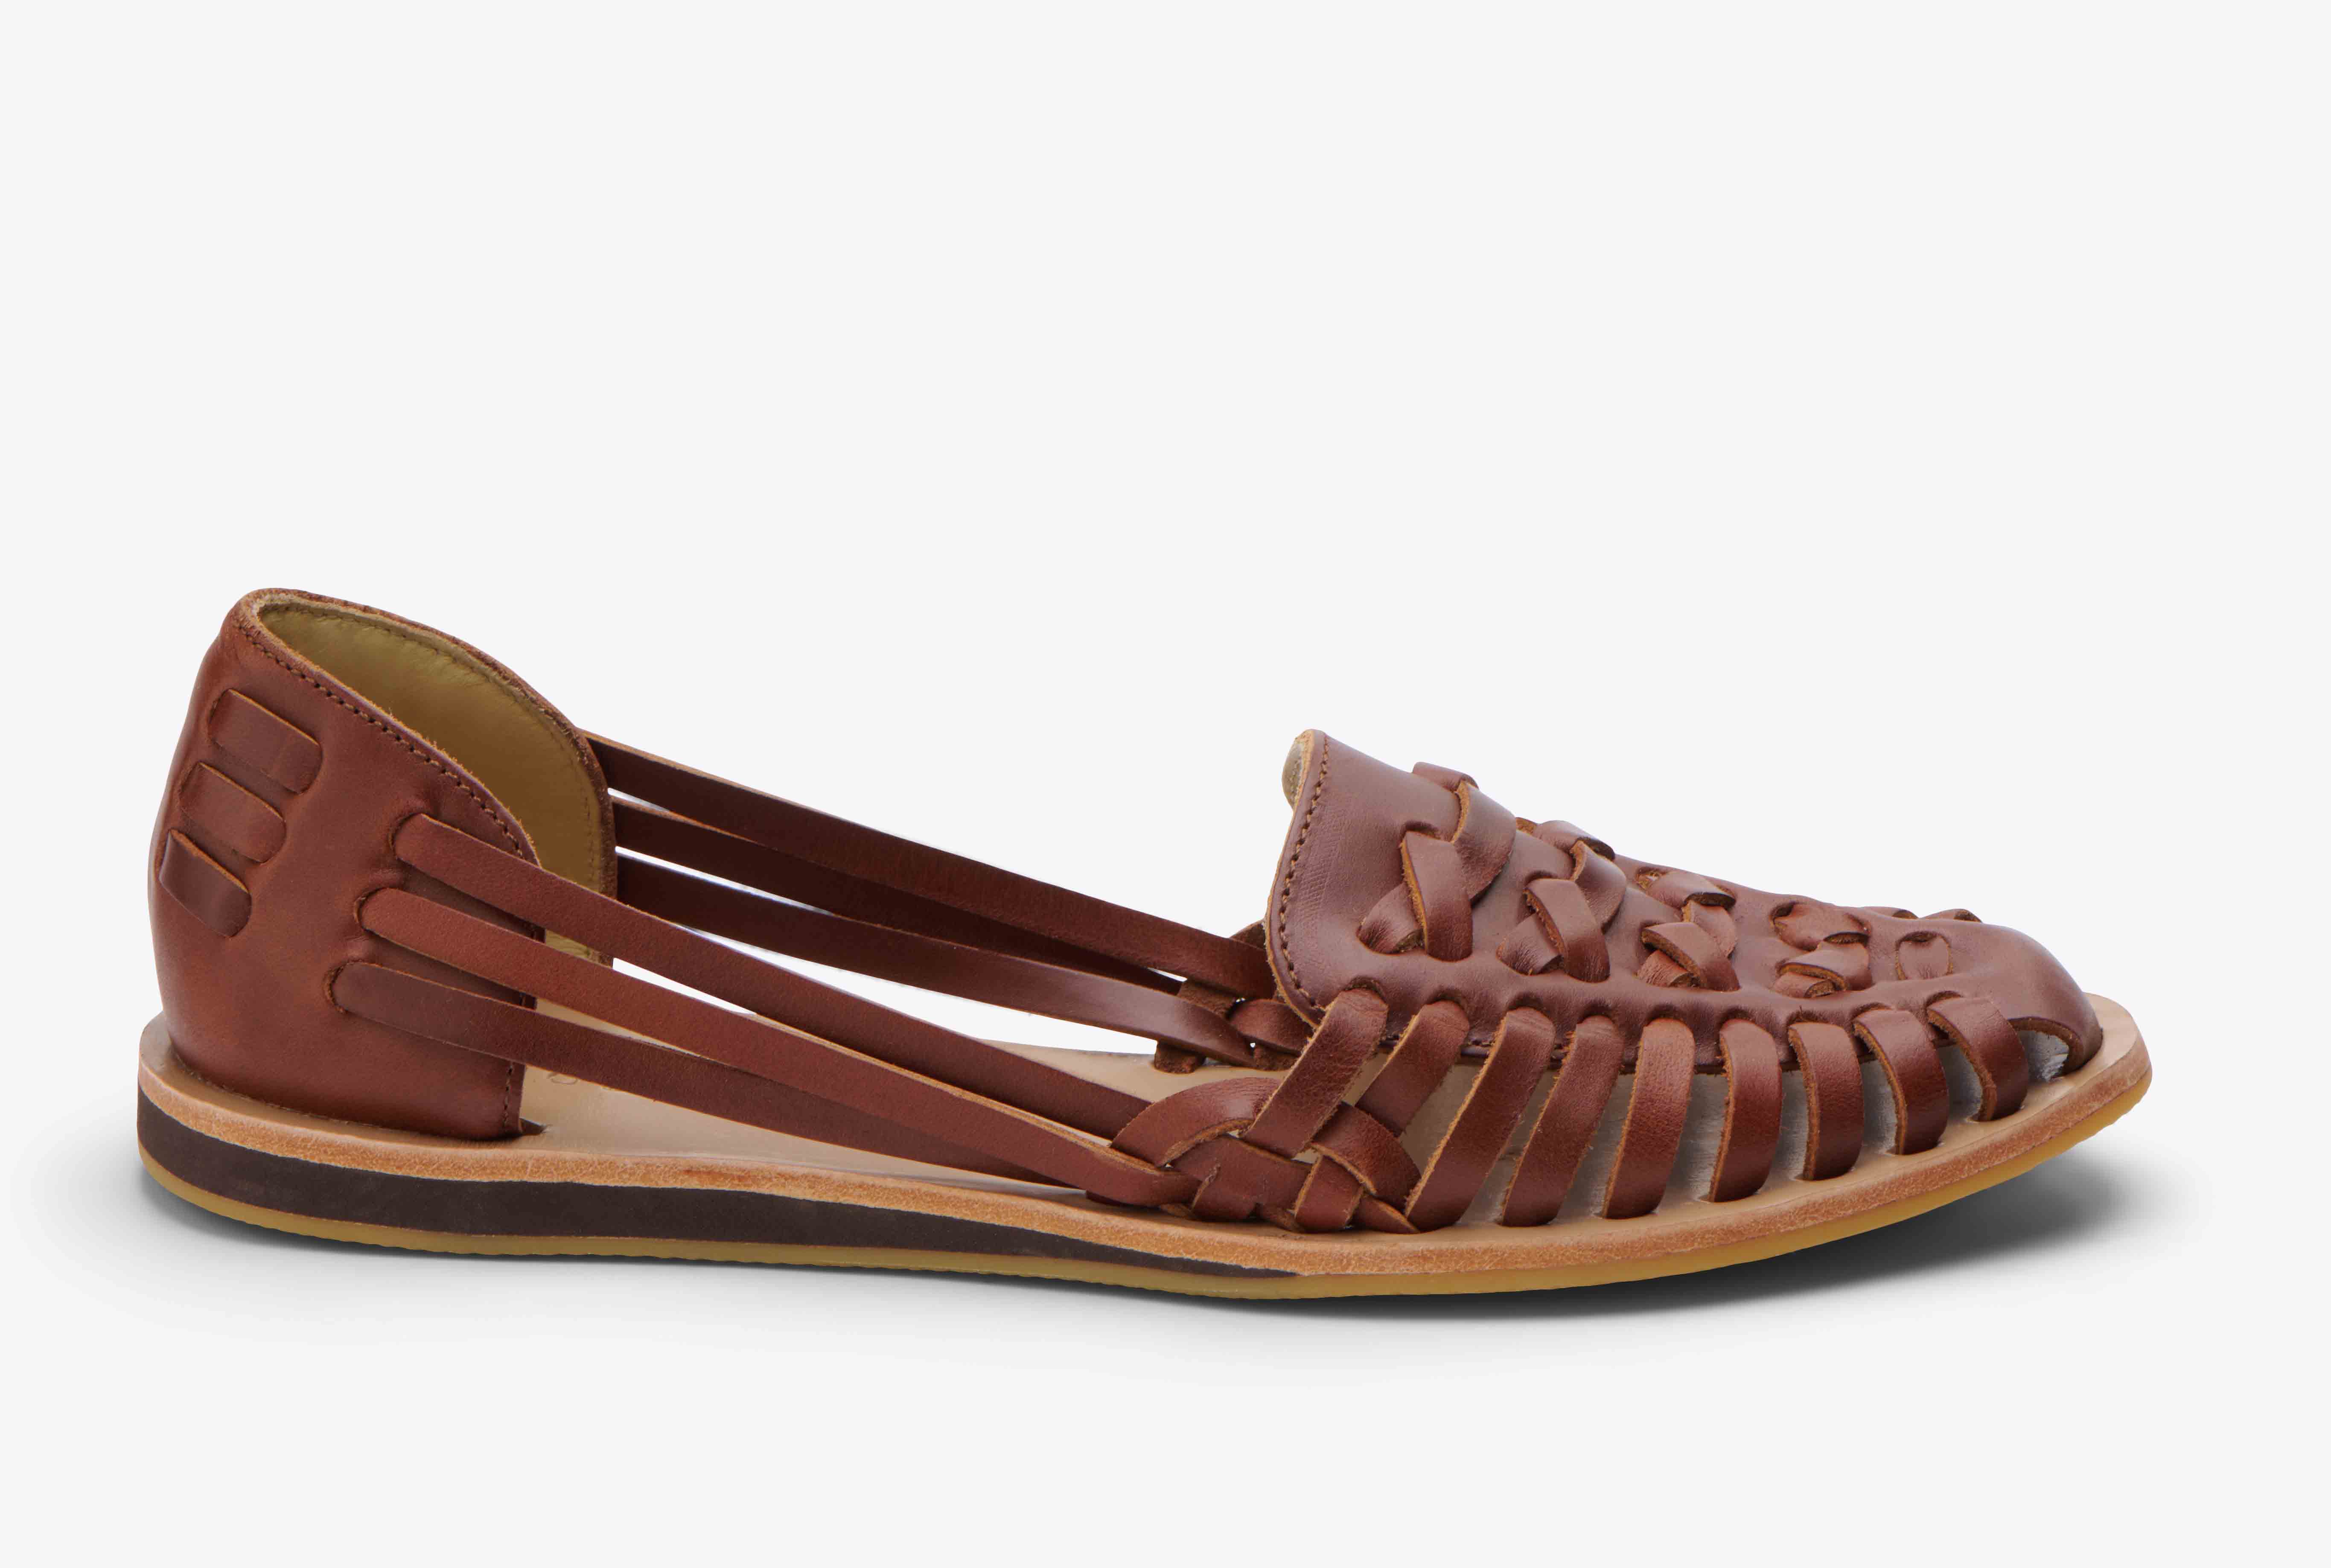 white leather huarache sandals